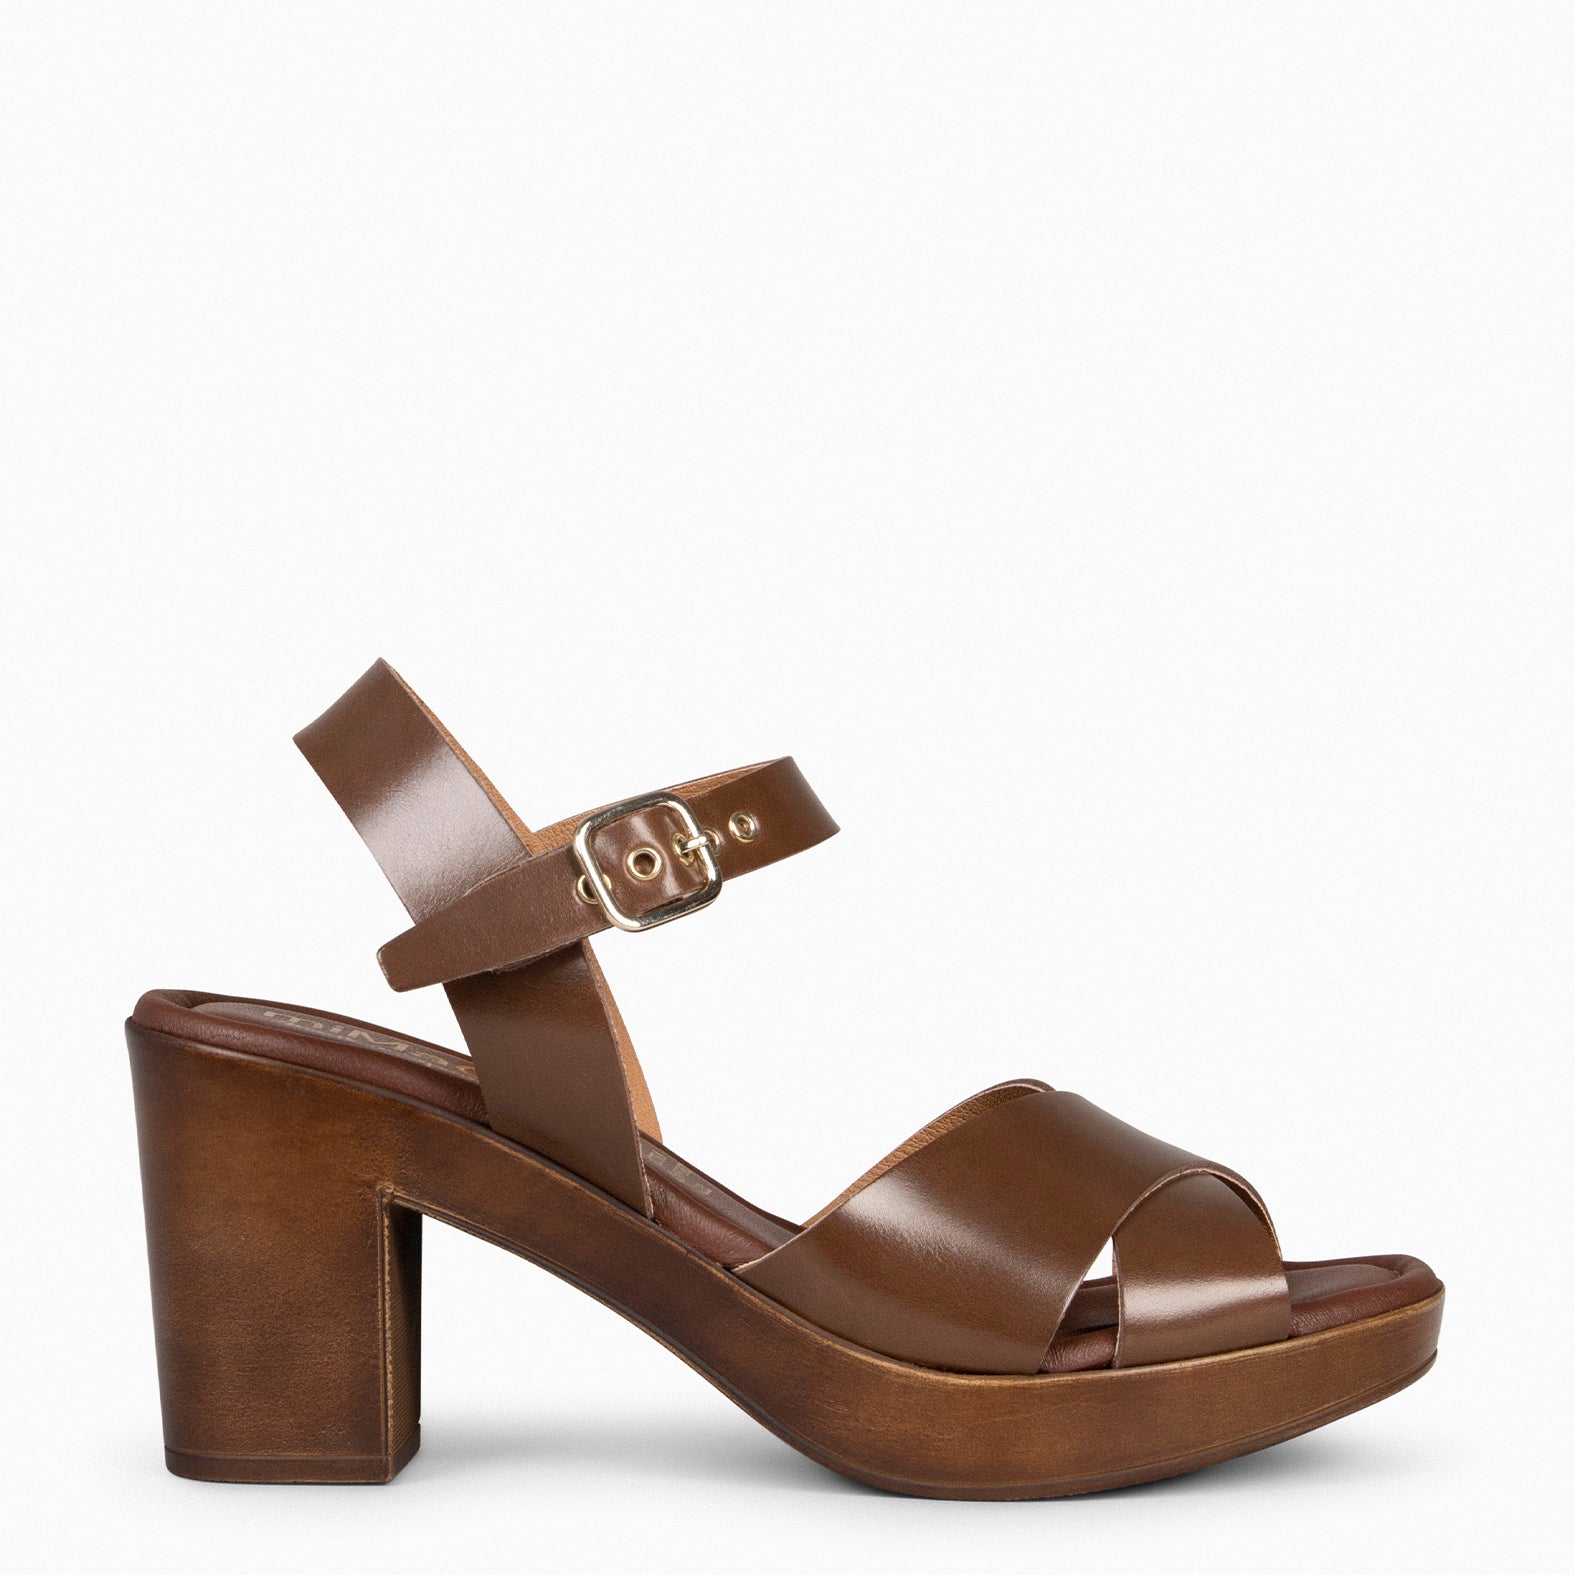 TAVIRA – BROWN wide-heeled sandal